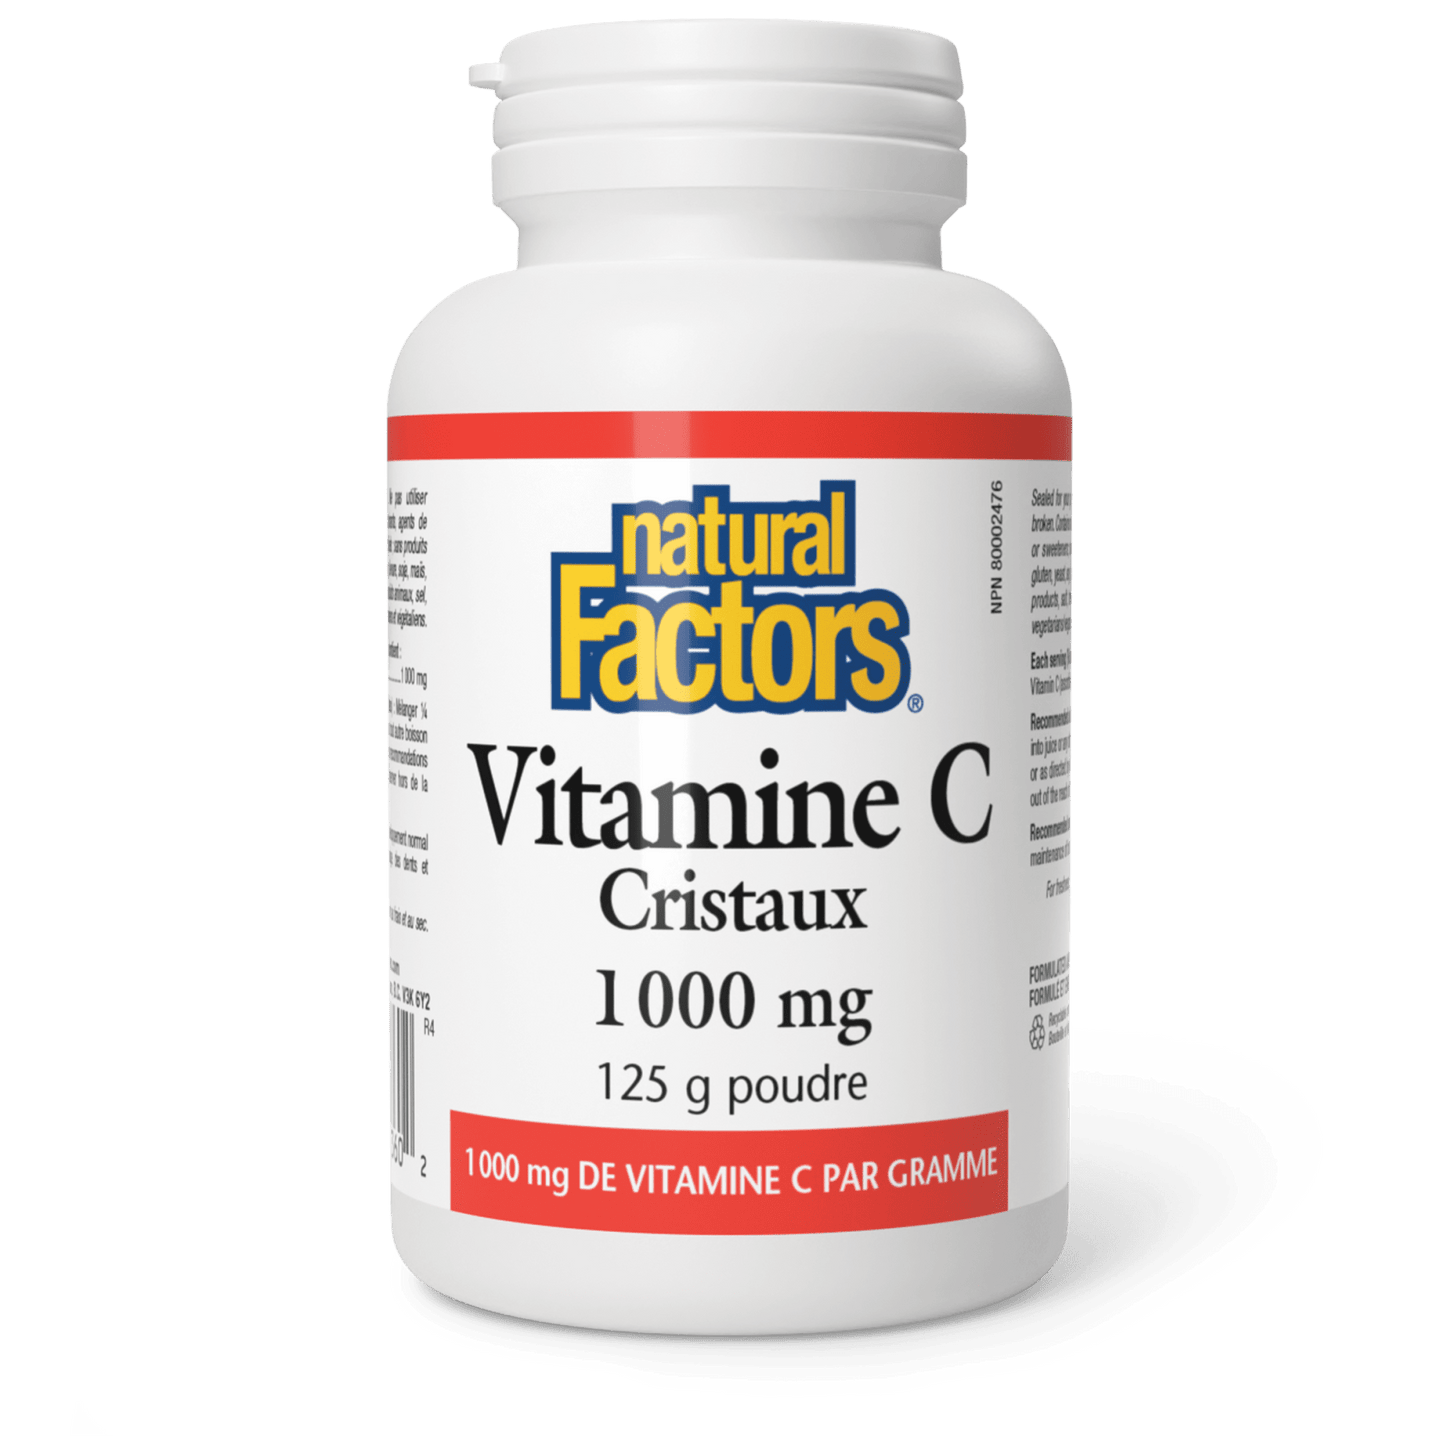 Vitamine C Cristaux 1 000 mg, Natural Factors|v|image|1360